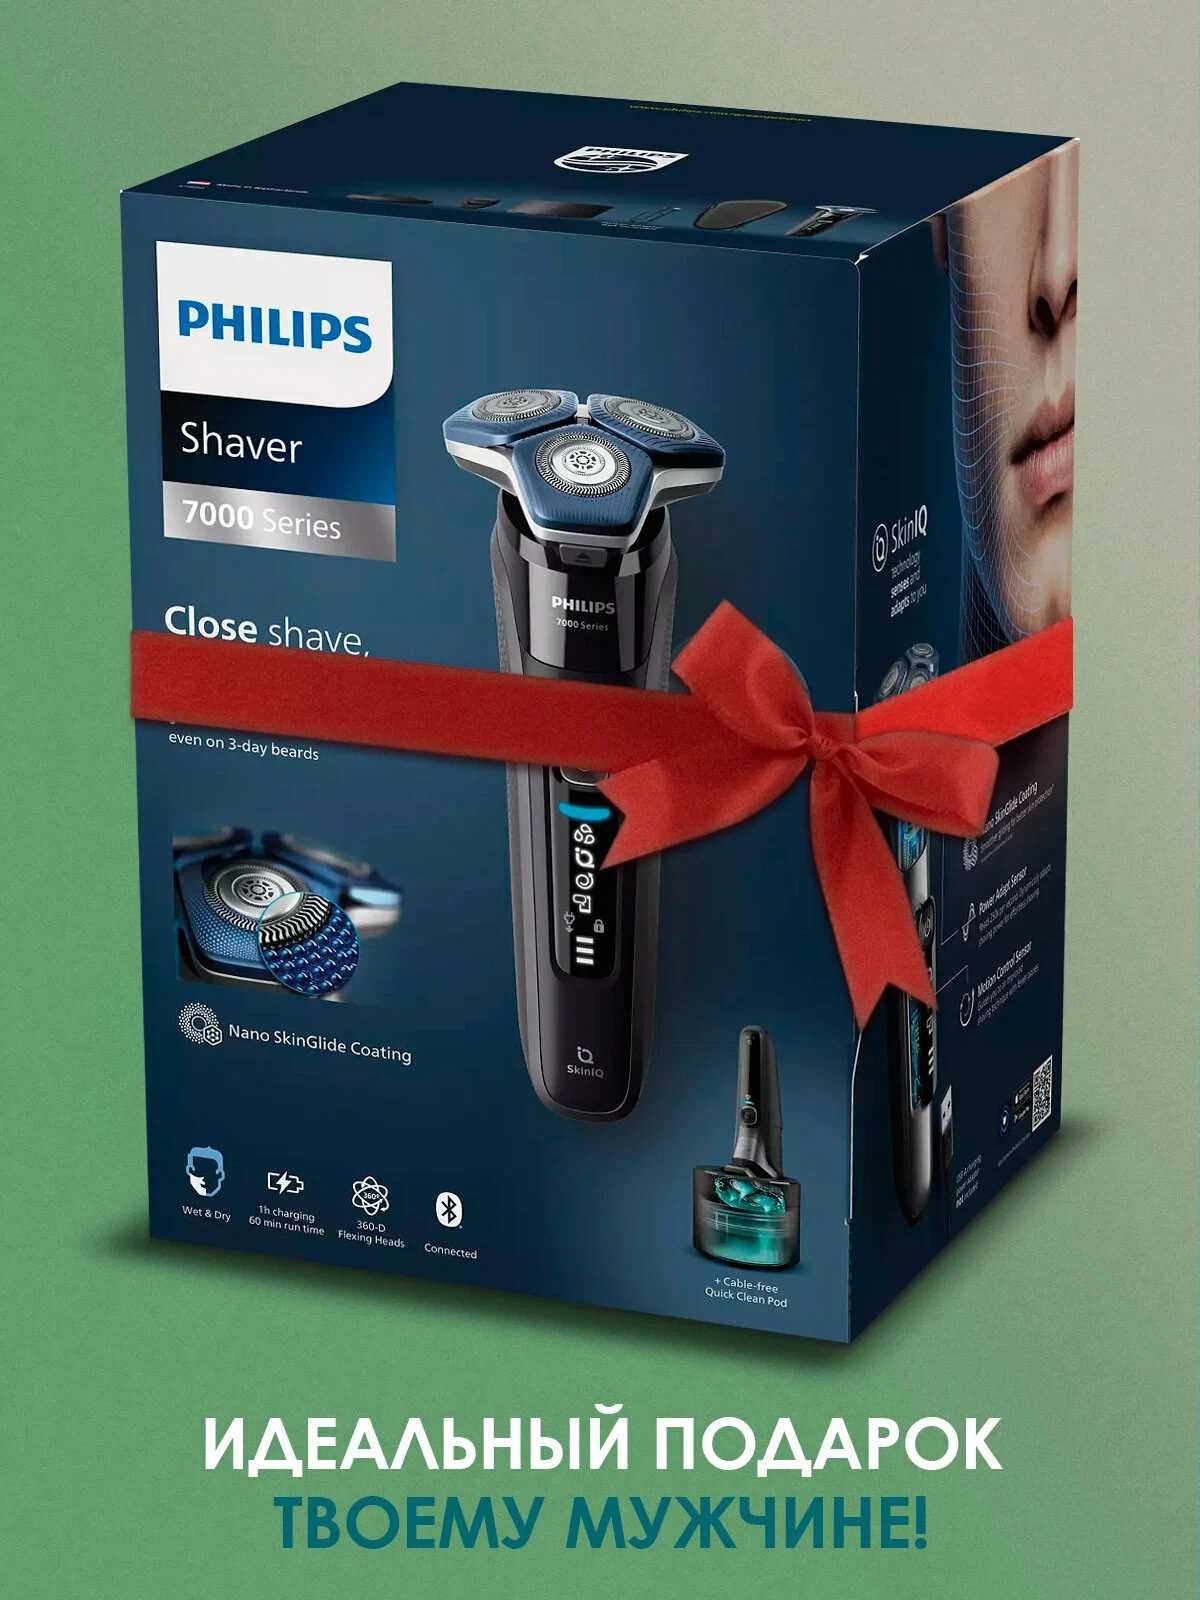 Электробритва для сухого и влажного бритья Philips Series 7000 SkinIQ